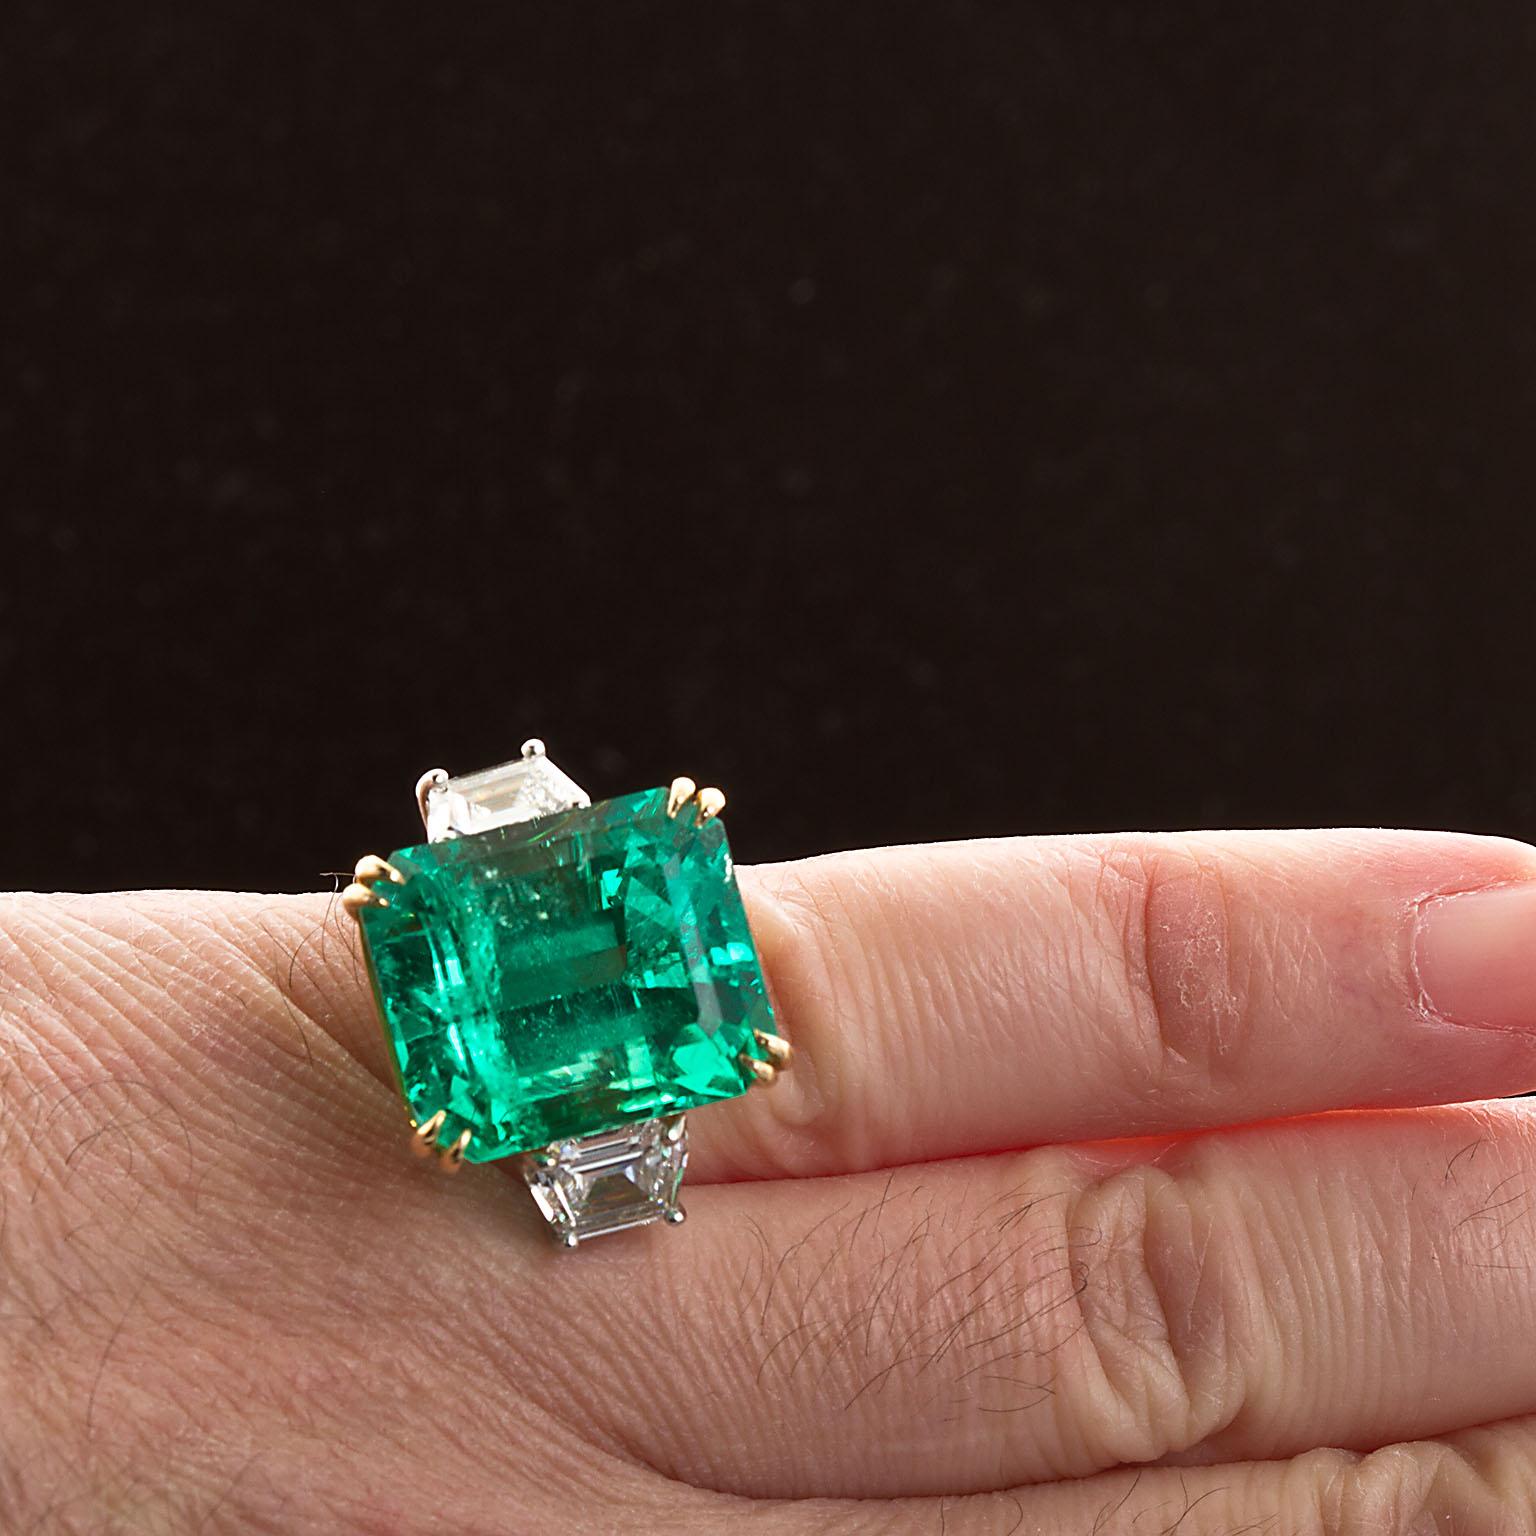 20 carat emerald cut diamond ring